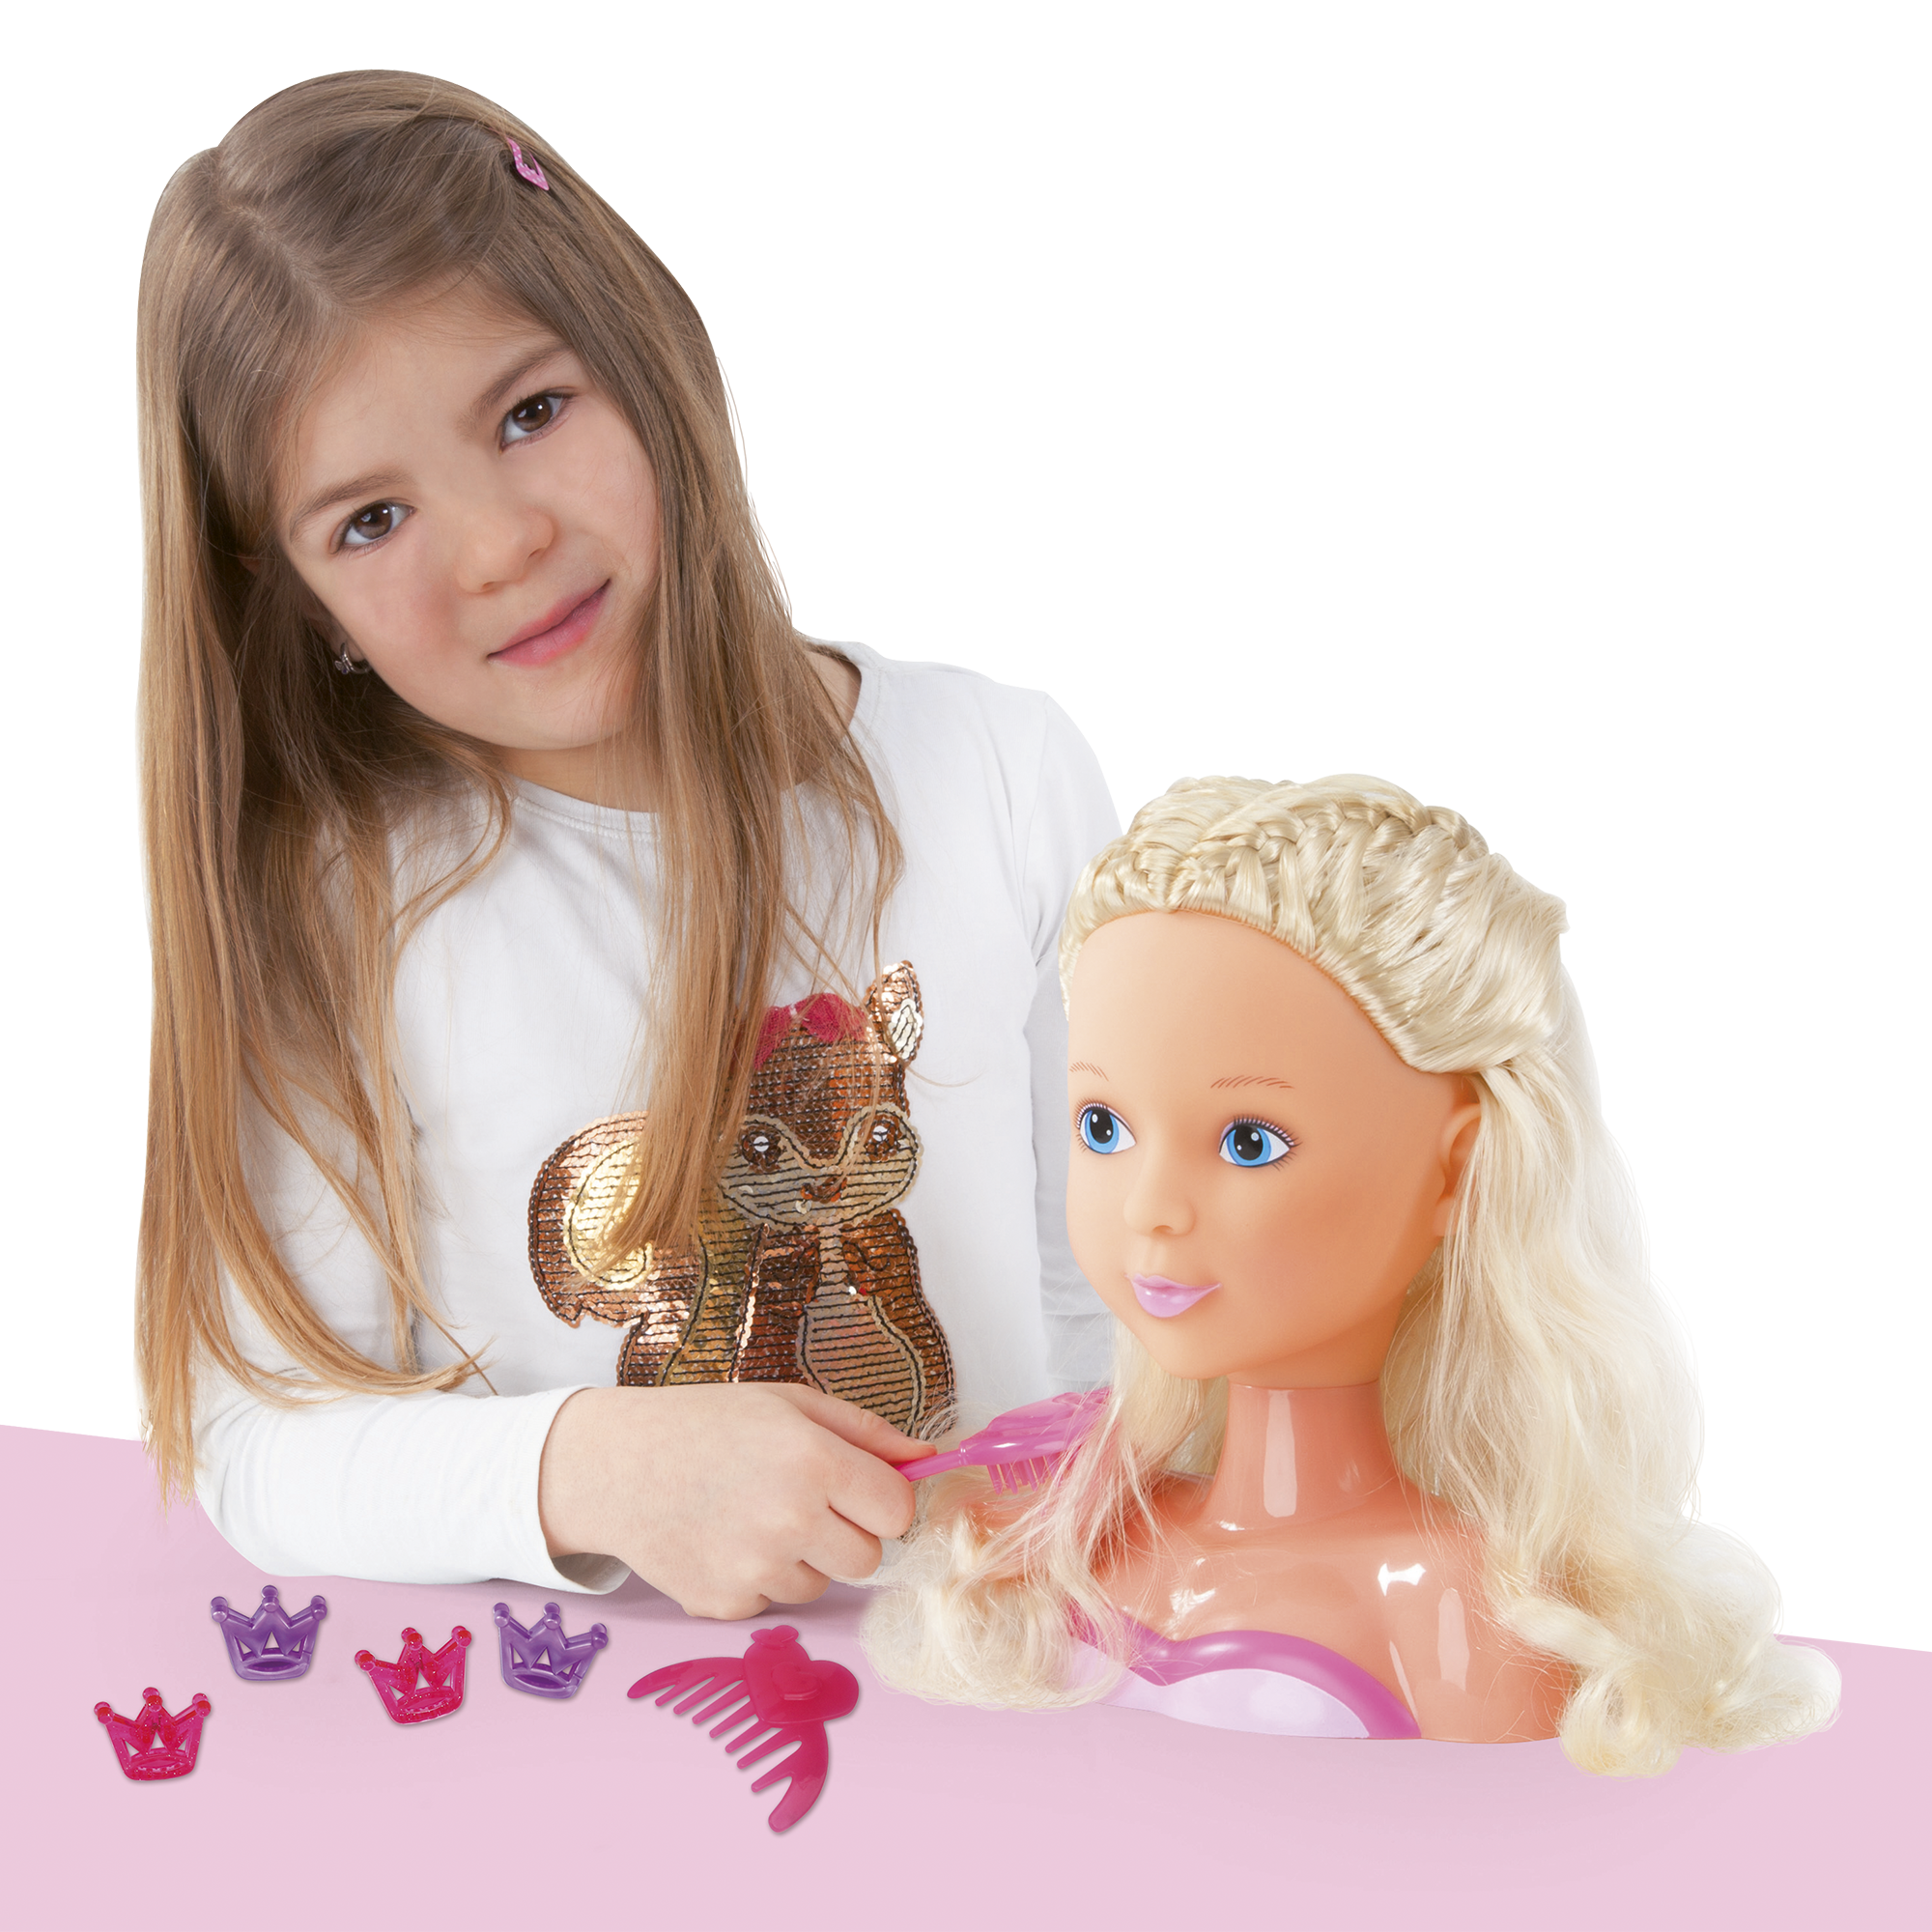 Testa da pettinare - hairstyle and beauty - Toys Center